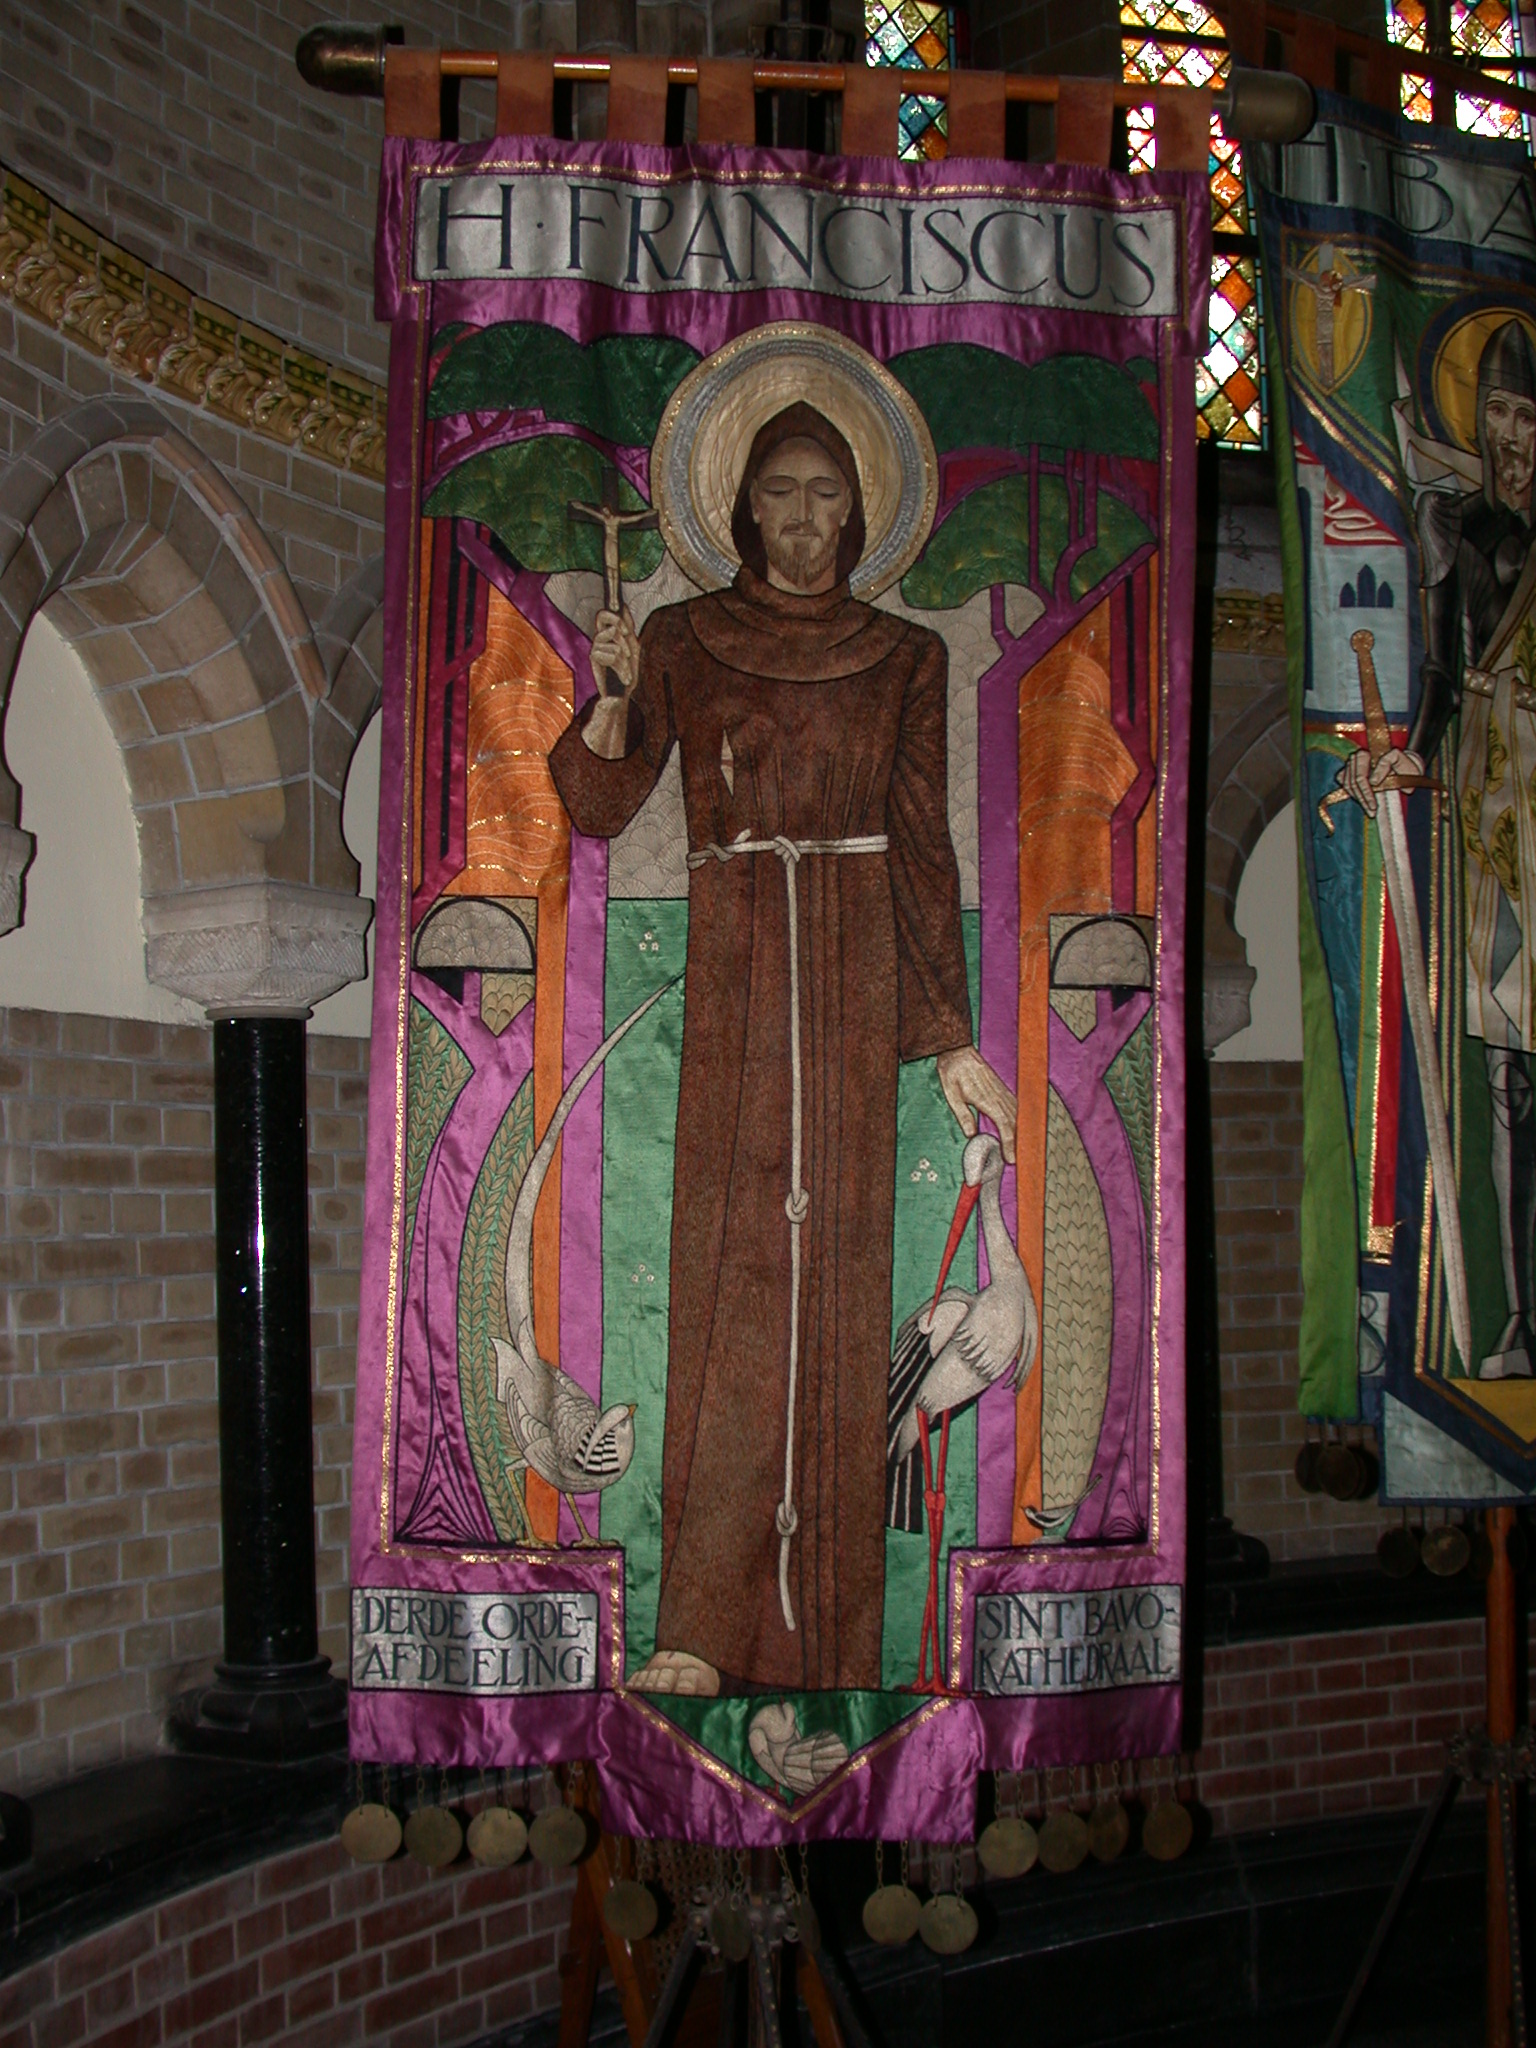 h franciscus saint banner church flag cloth texture fabric textures